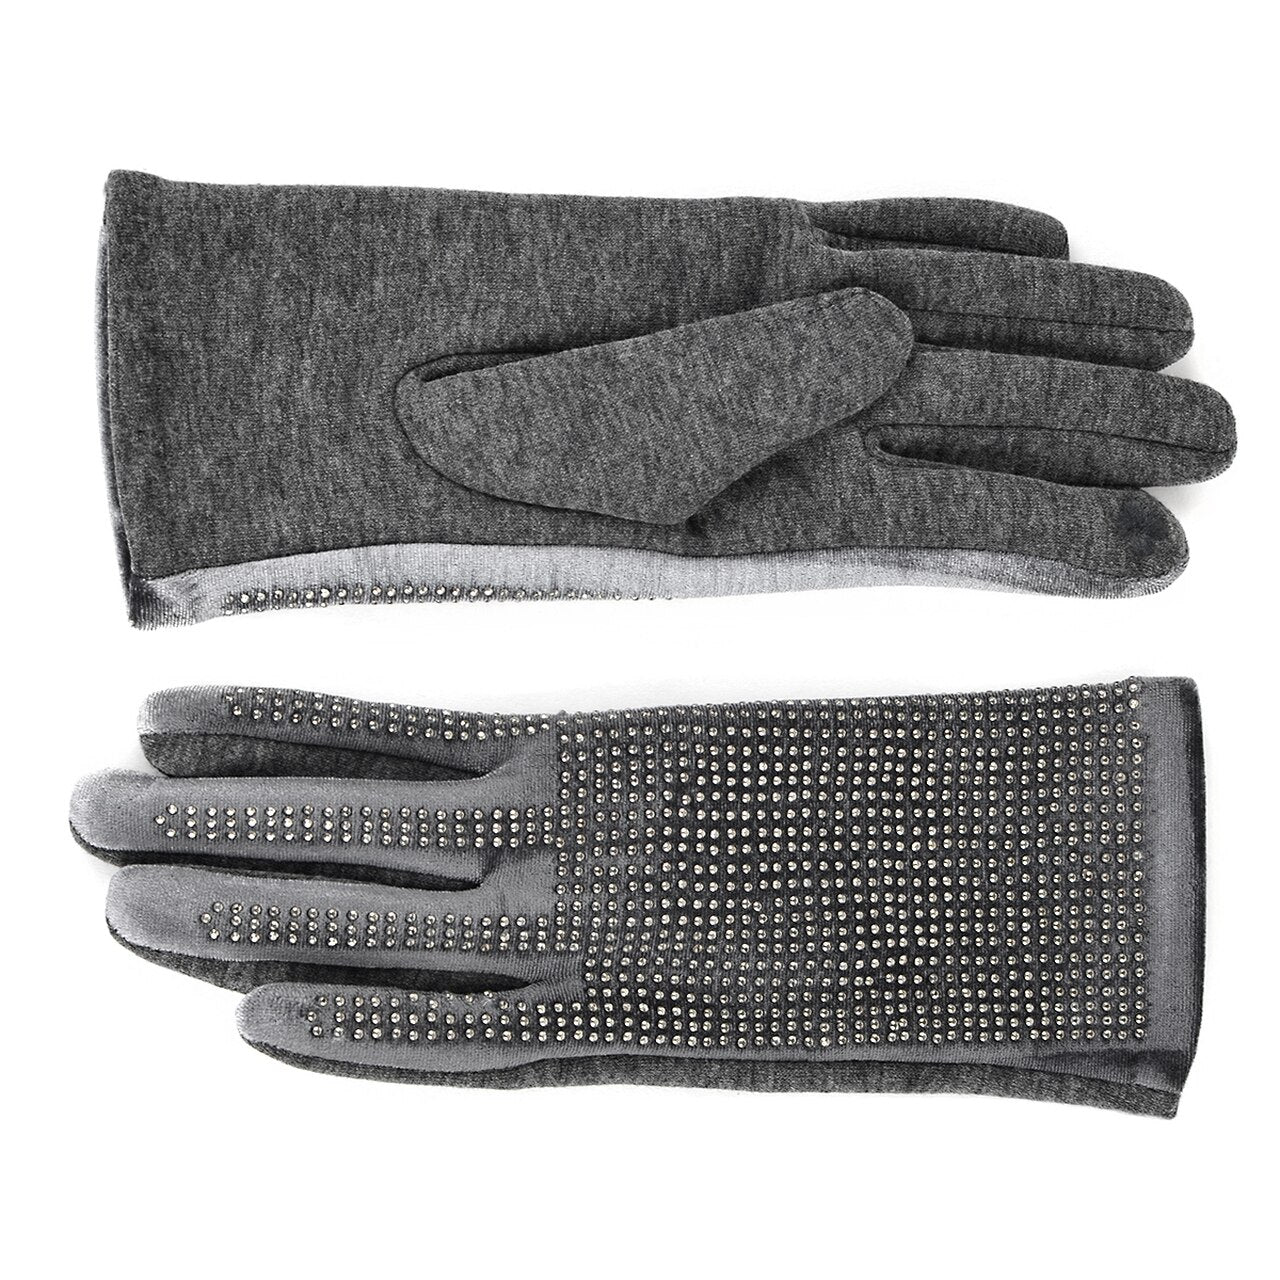 Diamond Doll Women's Rhinestone Studded Winter Gloves | Touch Screen | Soft Fleece Lining